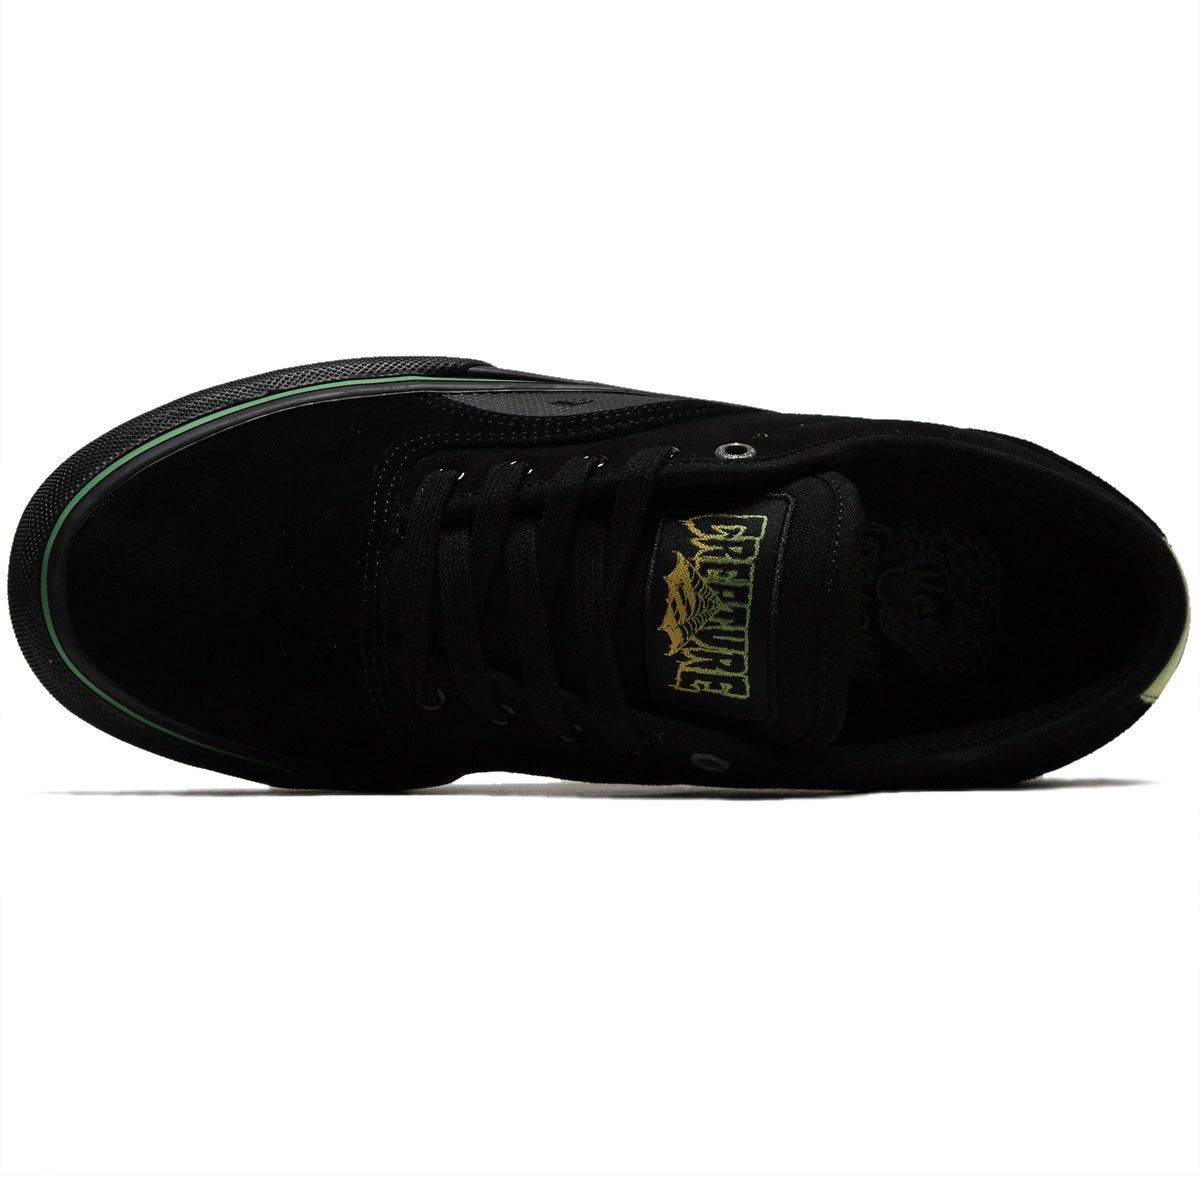 Emerica x Creature Provost G6 Shoes - Black/Black image 3